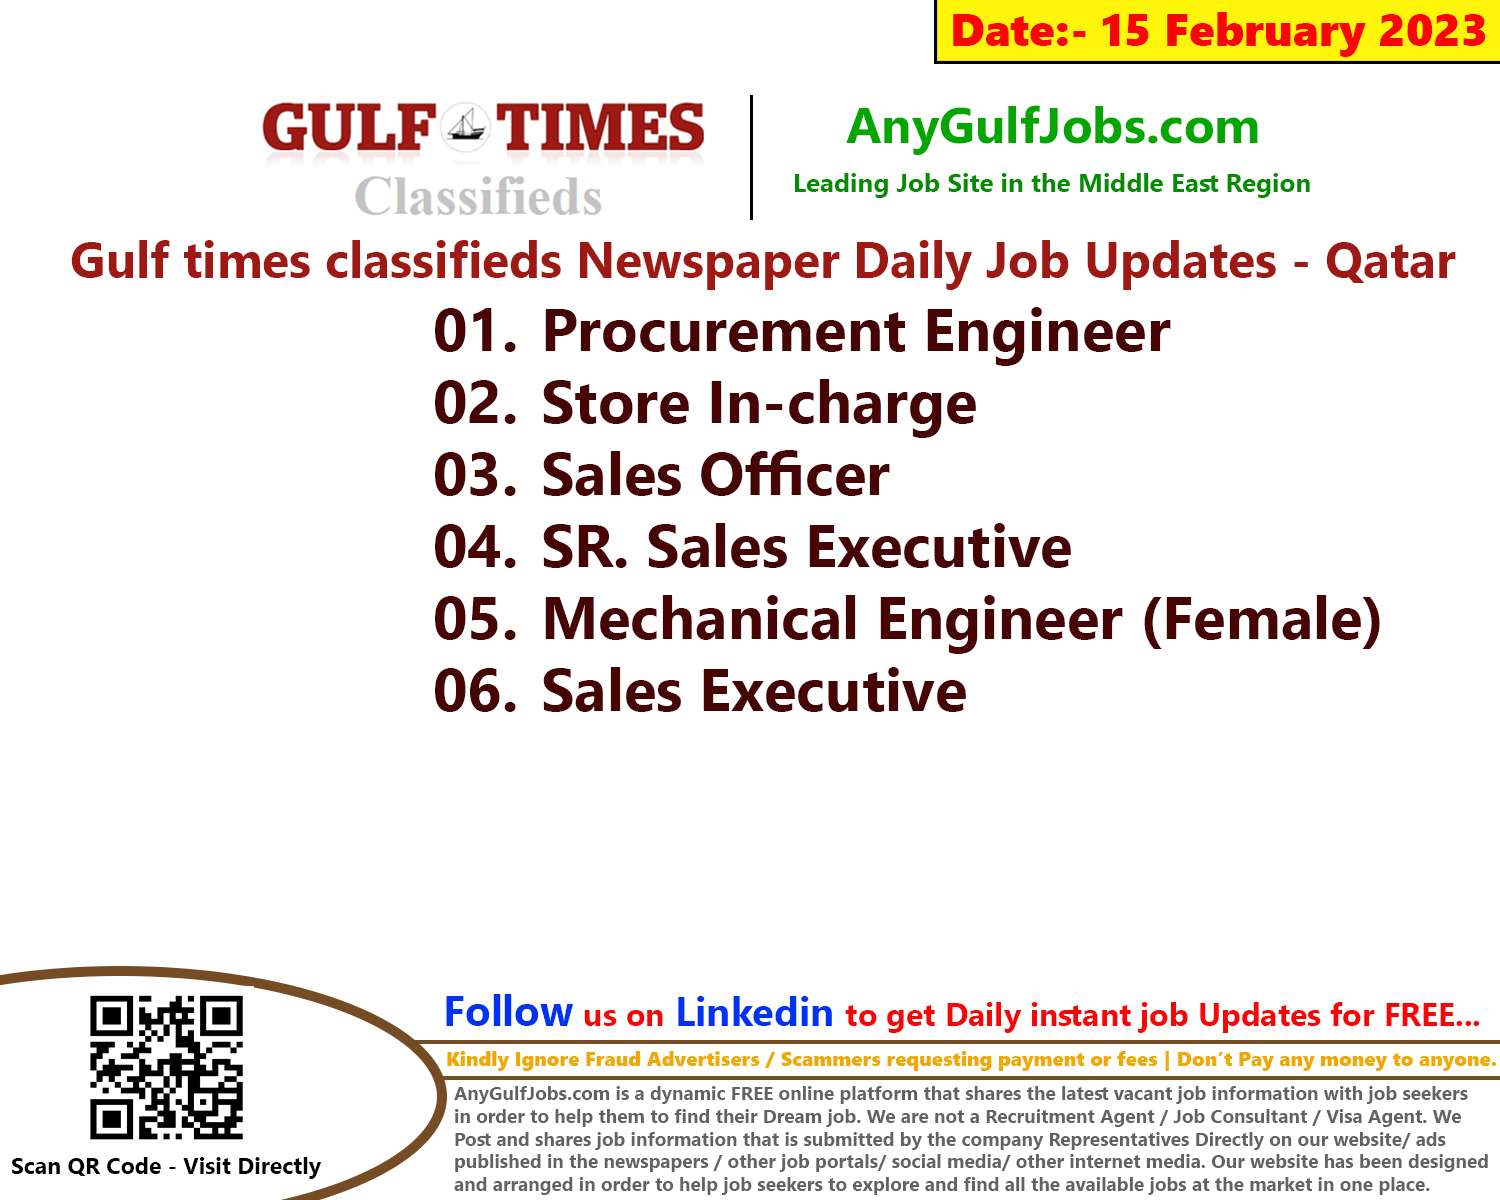 Gulf times classifieds Job Vacancies Qatar - 15 February 2023